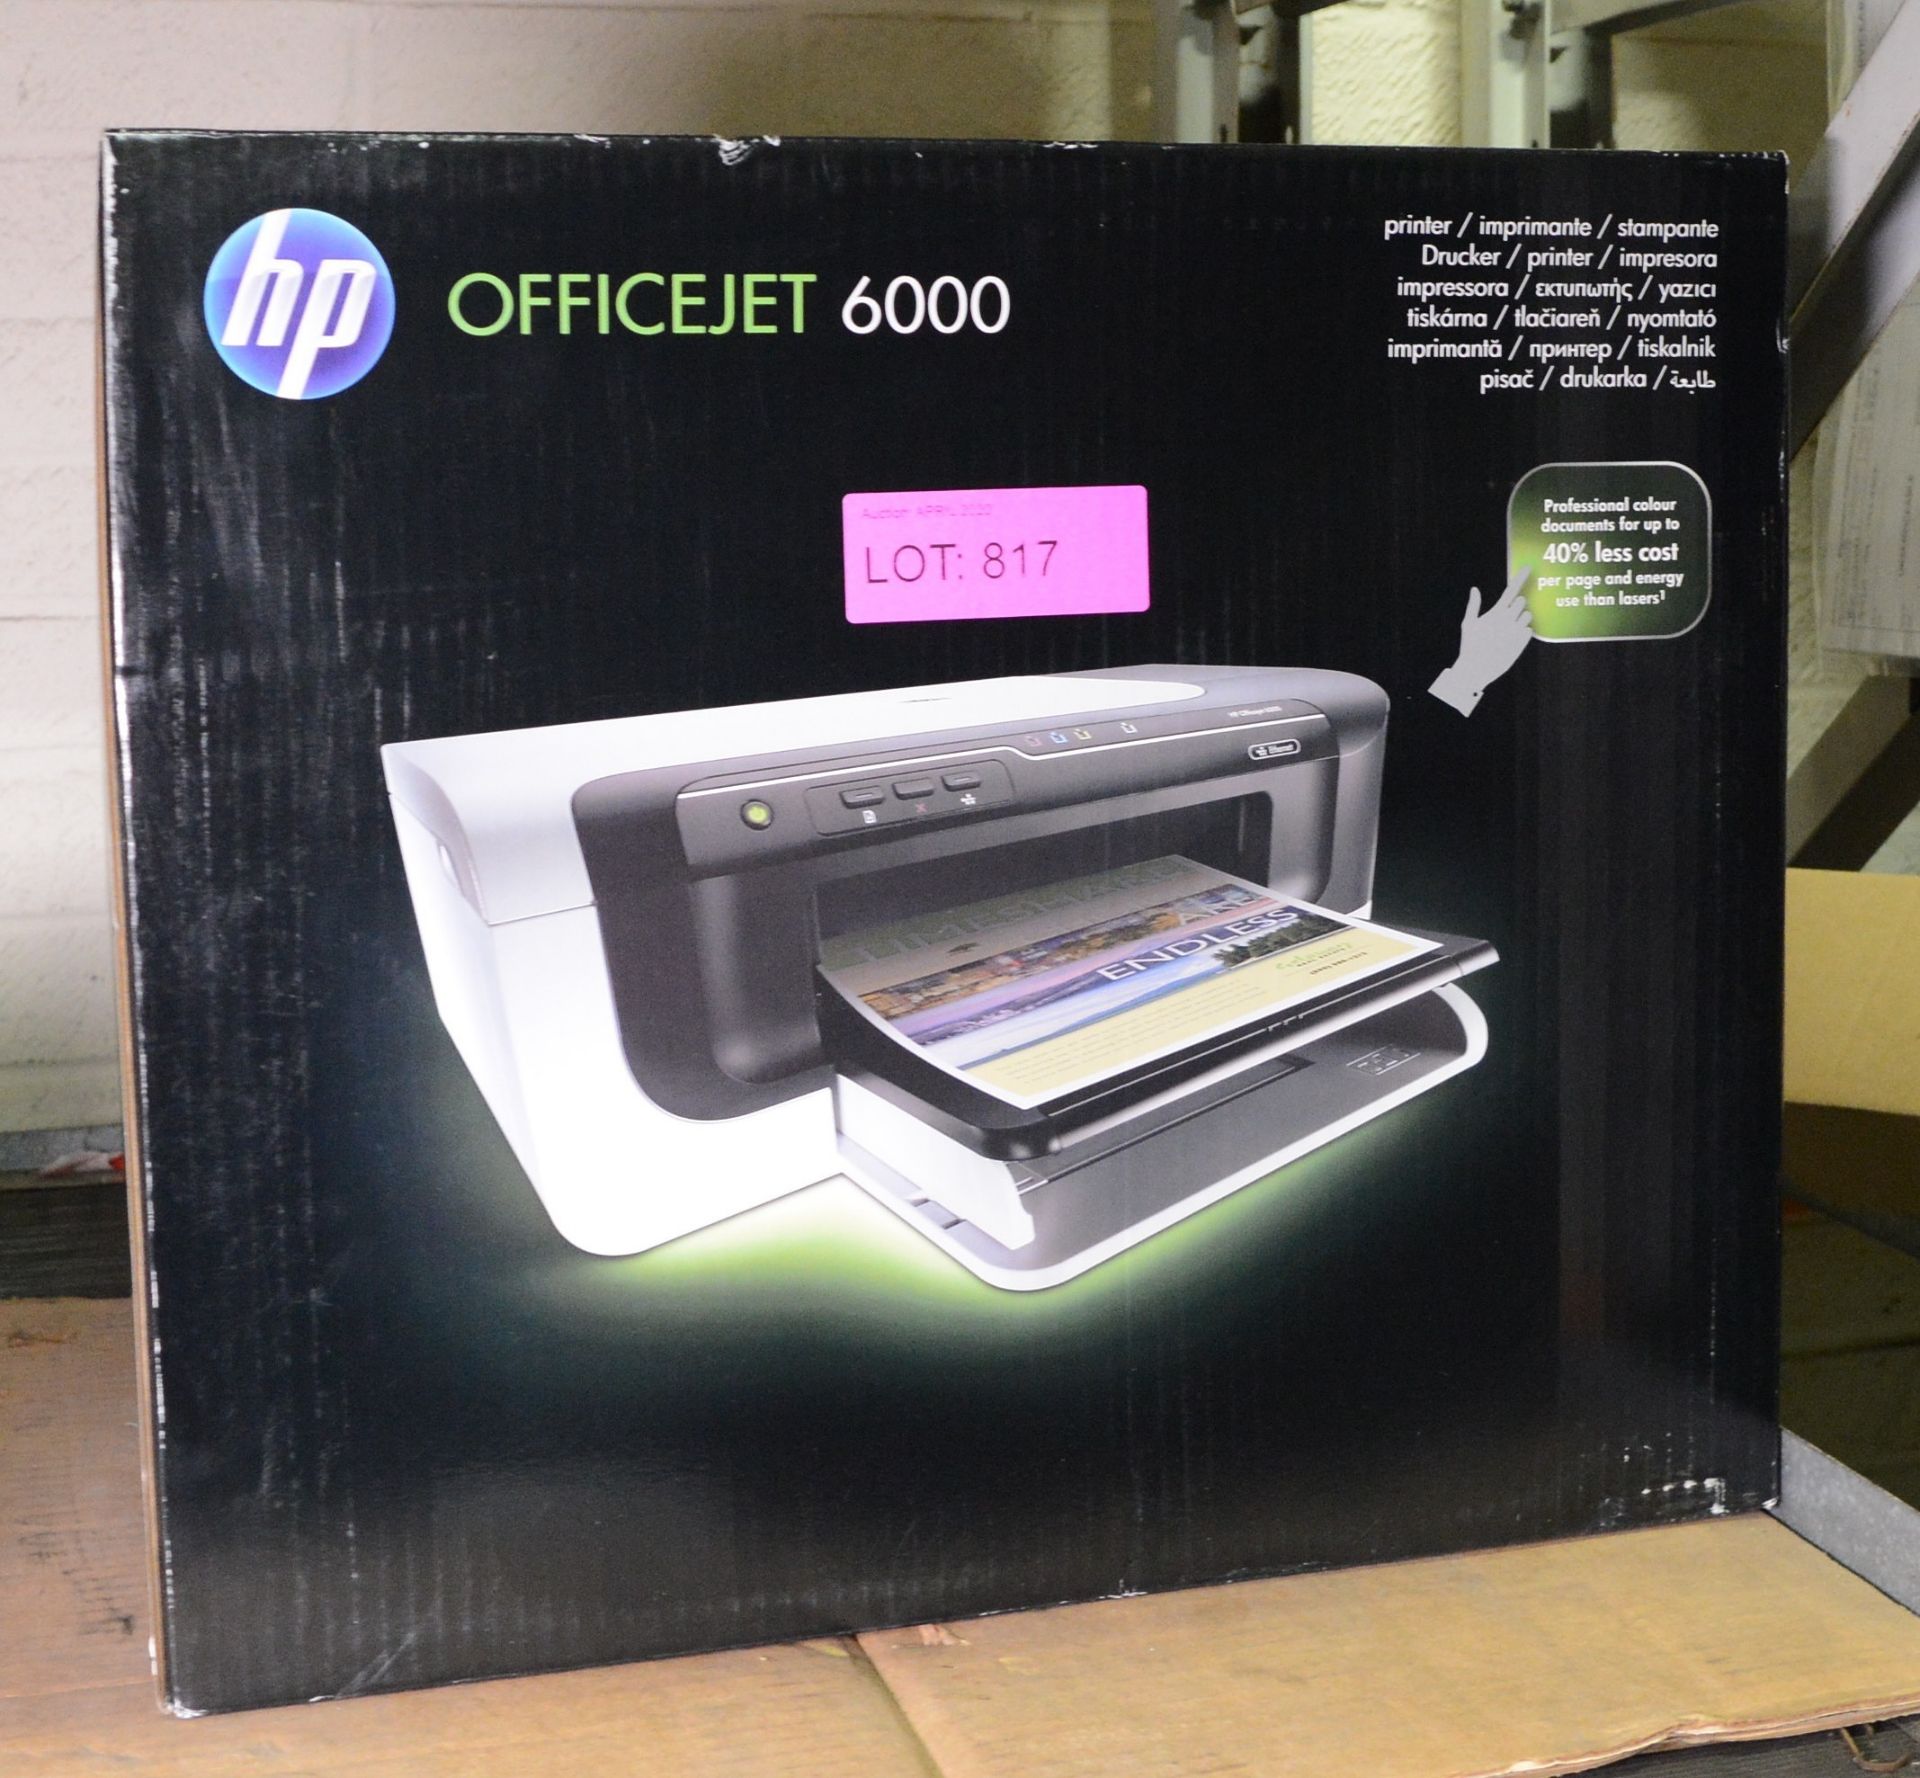 SZA 20664 HP Officejet 6000 Printer.